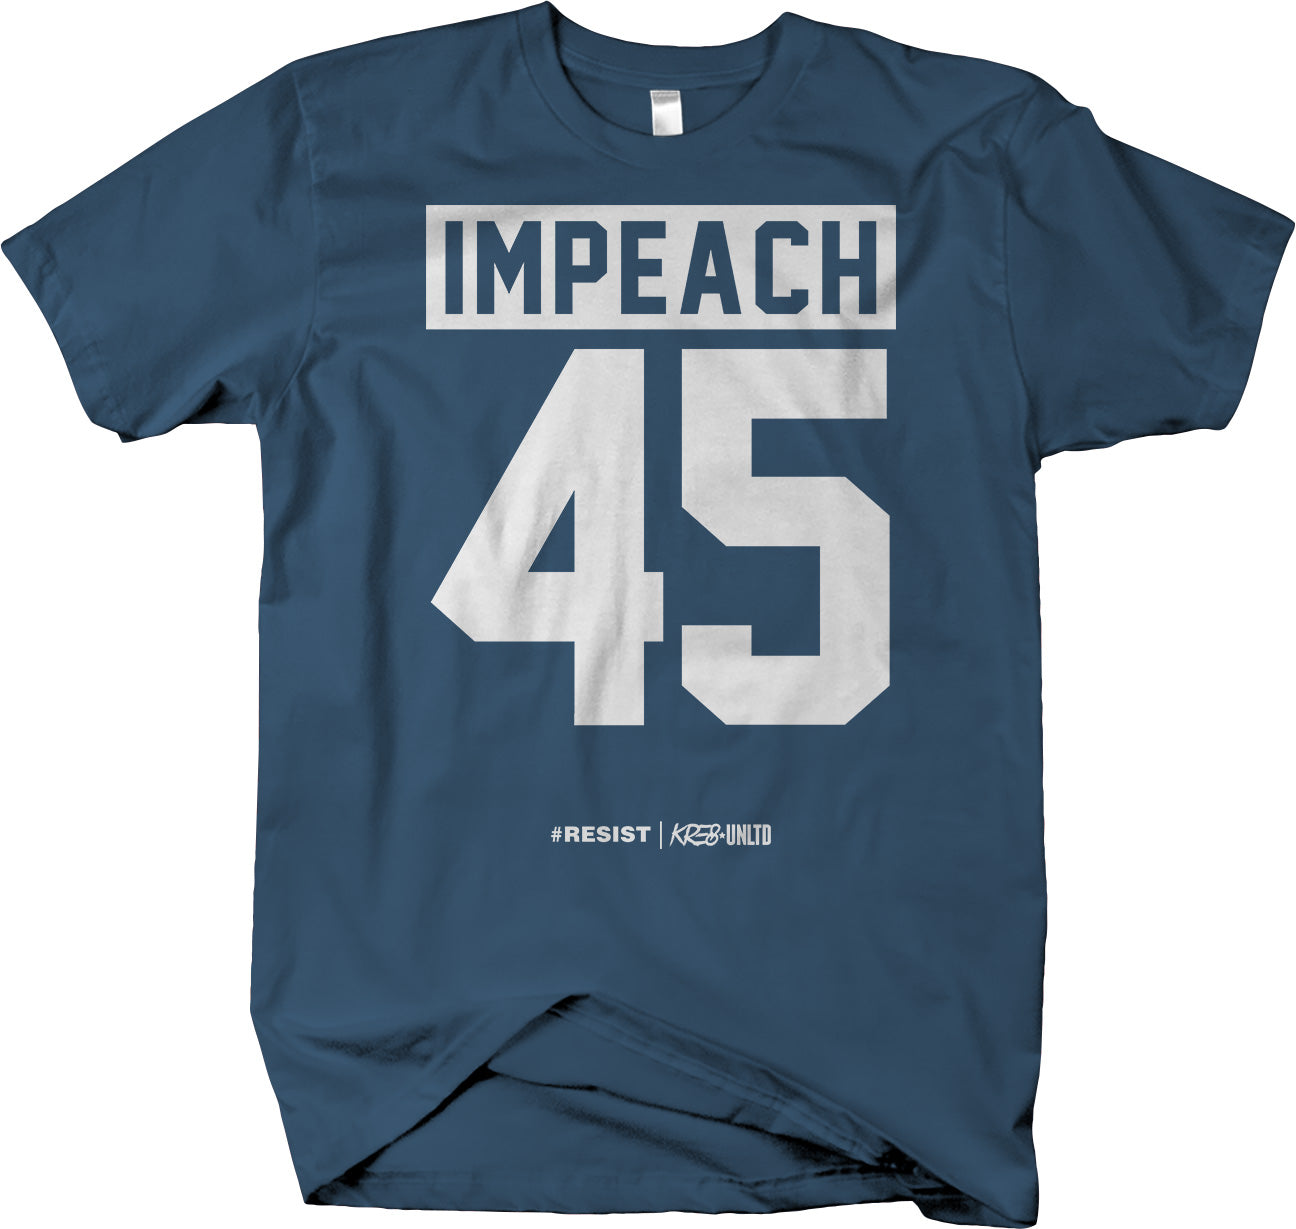 Impeach 45 v2  - Political Protest Anti Trump T-shirt - Larger Sizes